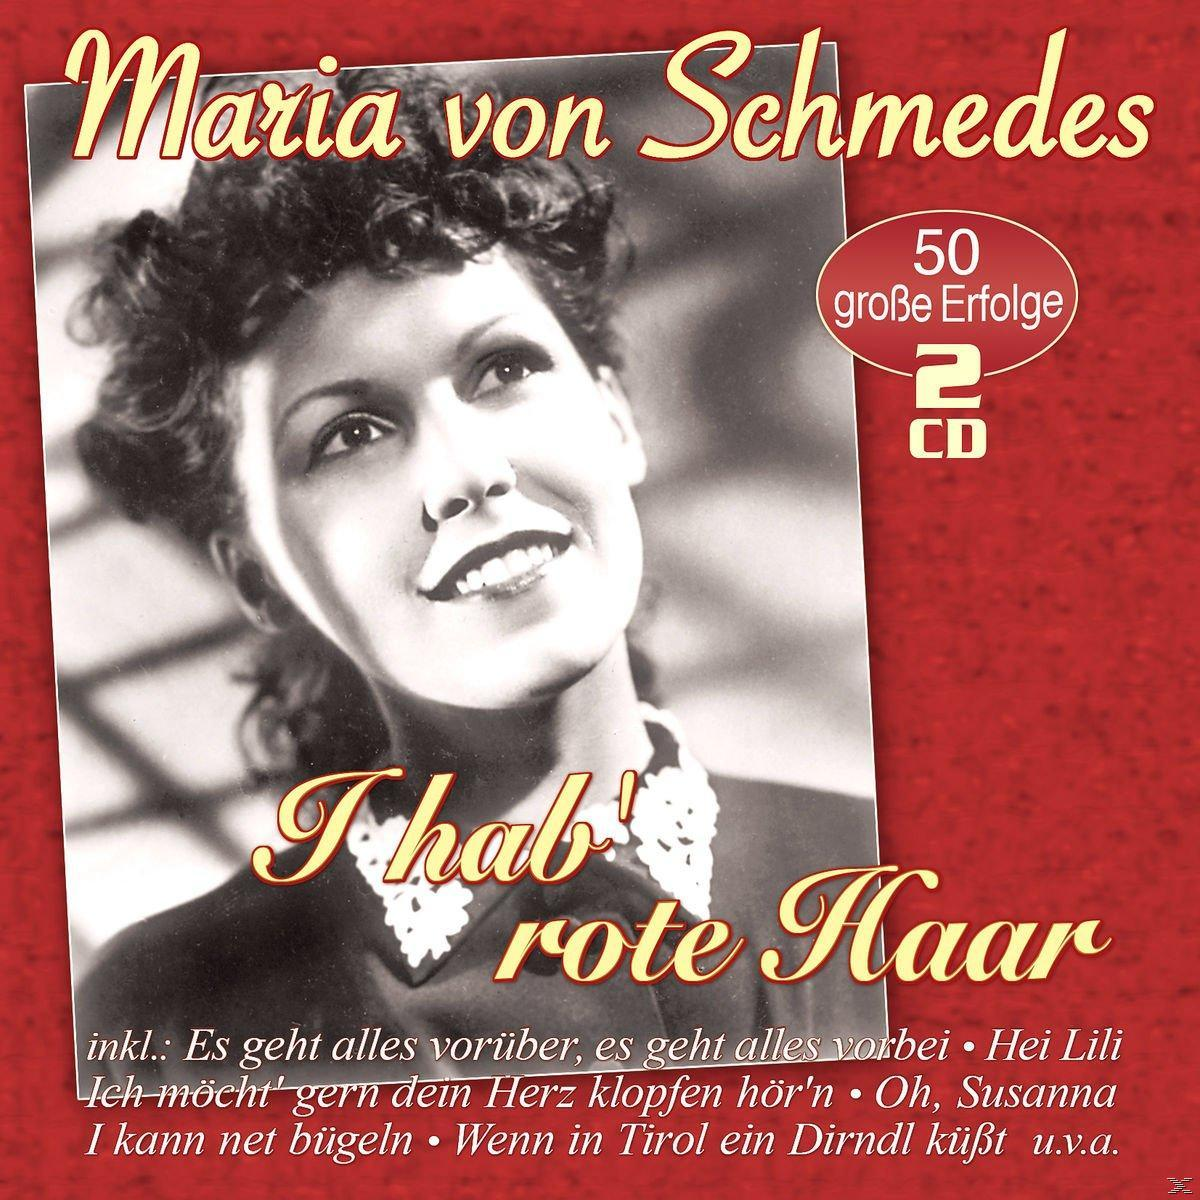 (CD) Schmedes - Rote Maria Große Erfolge Hab\' Haar-50 Von - I